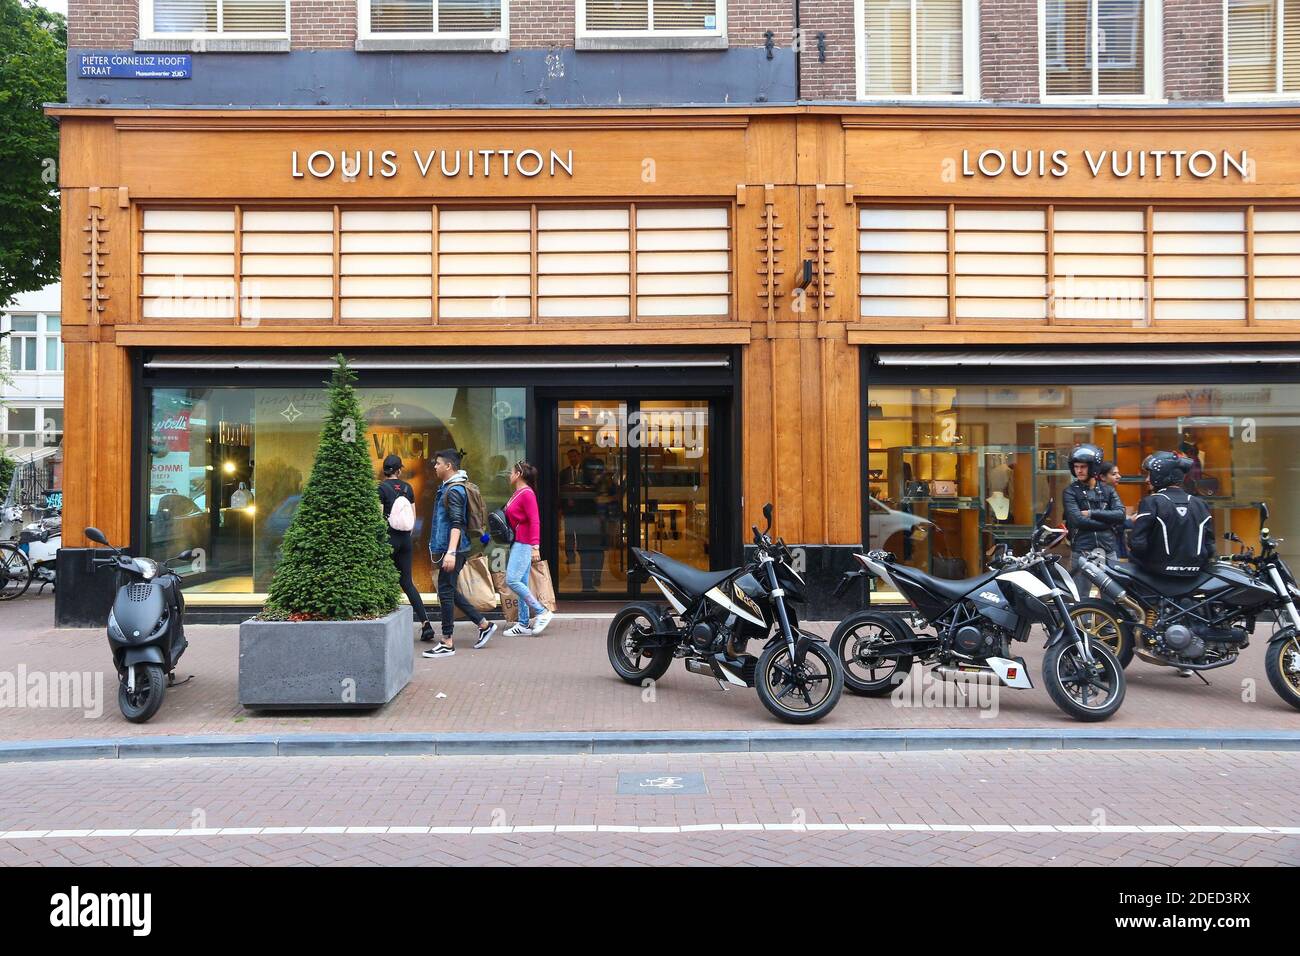 Louis Vuitton P.C. Hooftstraat Amsterdam